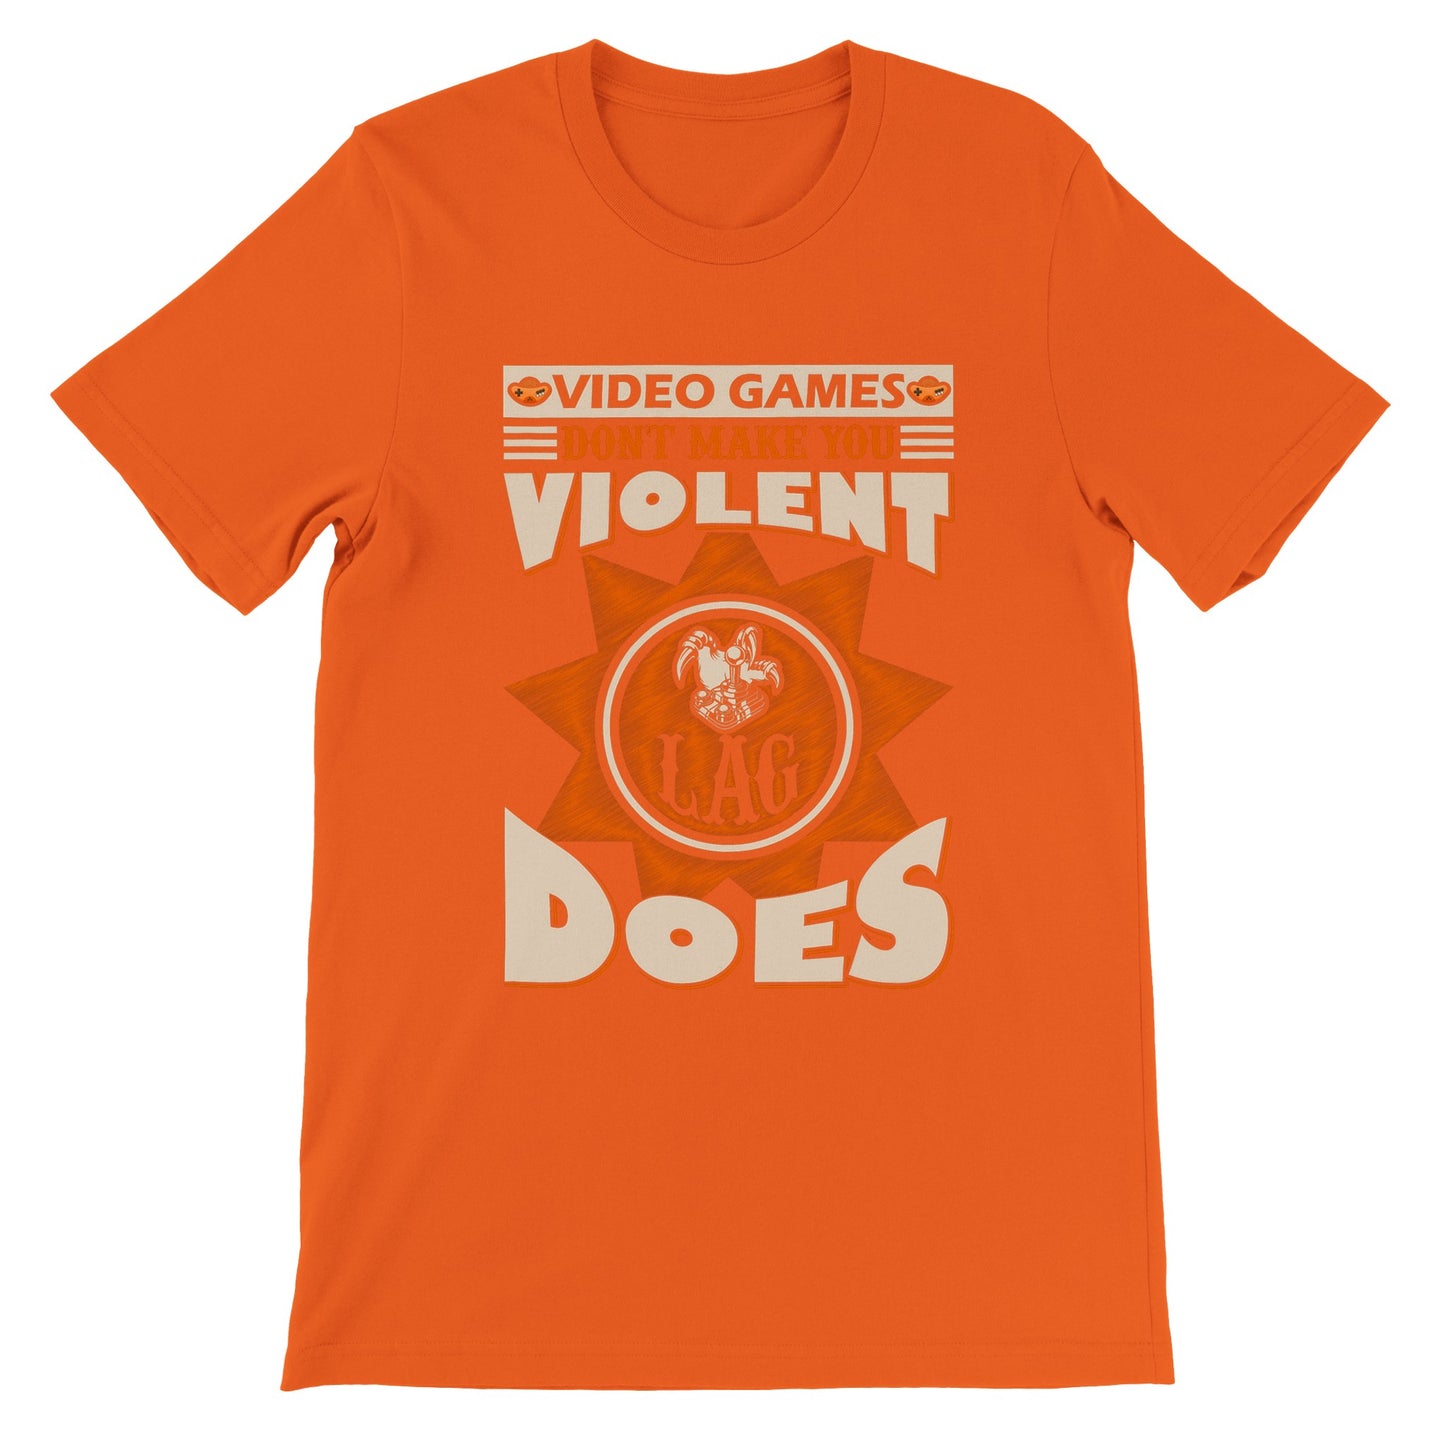 Gaming T-shirts - Video Games Dont Make You Violent, Lag Does - Premium Unisex T-shirt